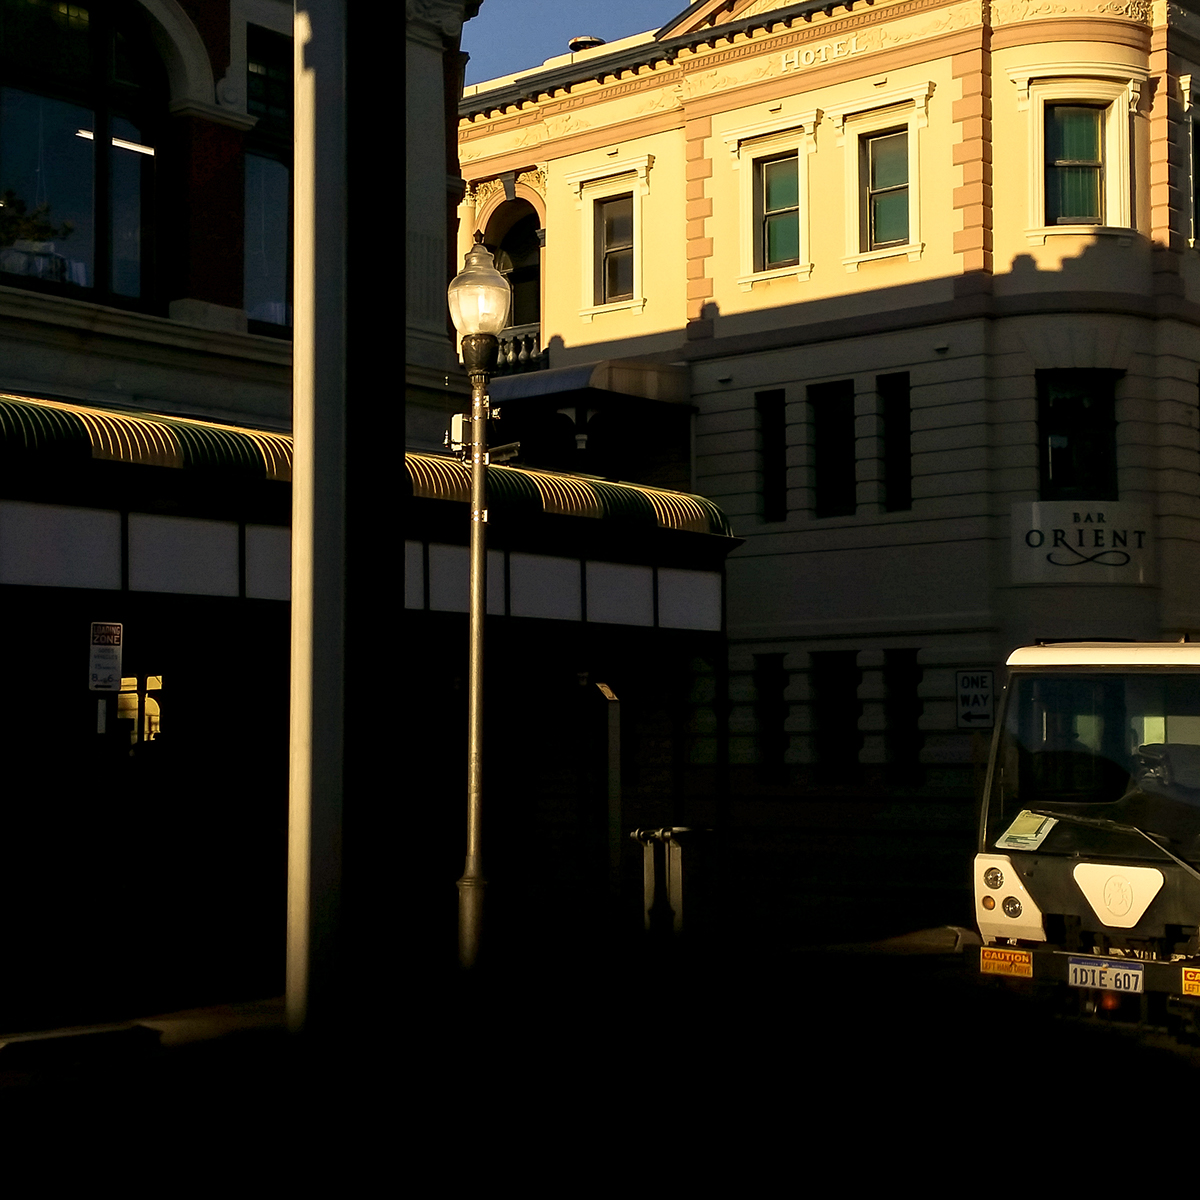 Samsung s5 mobile phone fremantle perth Australia Urban Street Shadows